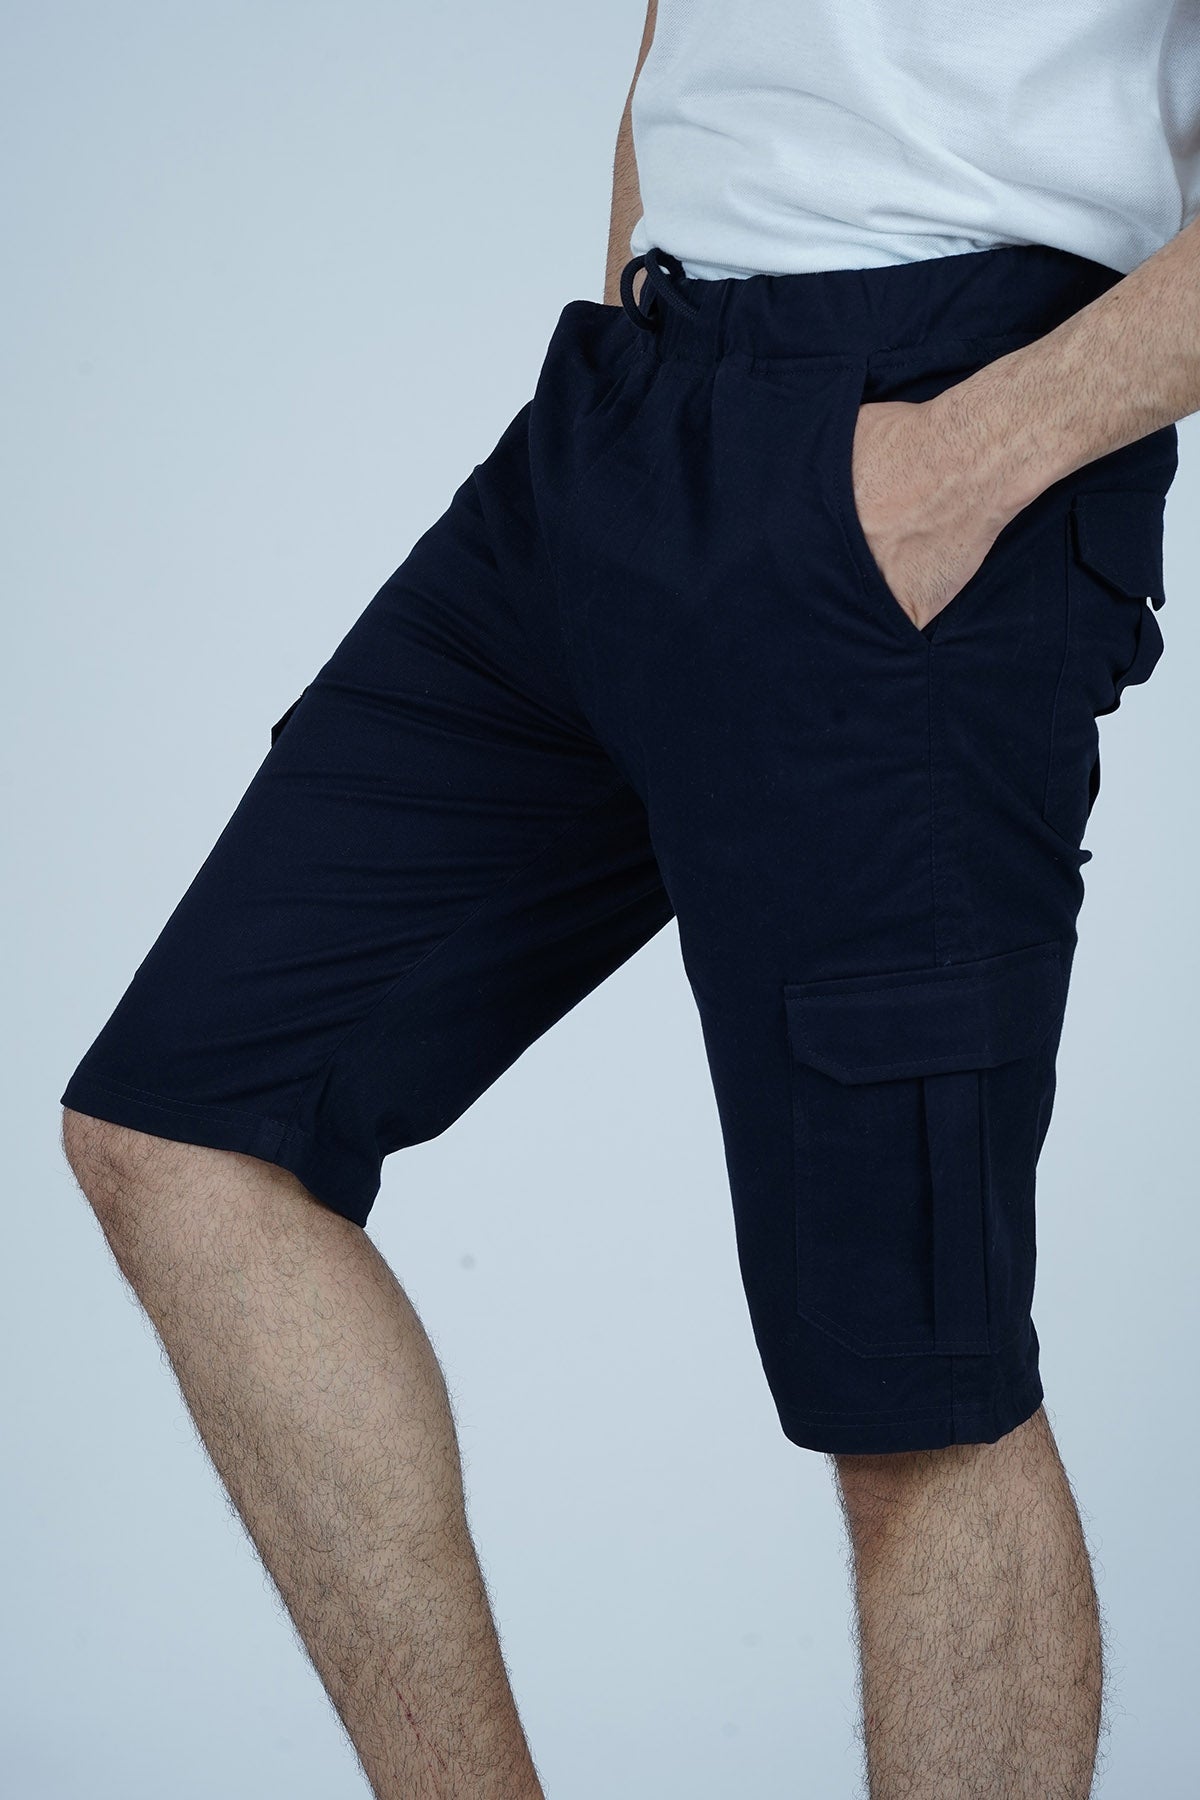 Men's Shorts Navy Blue | Cargo Shorts | XEA Stay stylish in Xea Navy Blue Cargo Shorts with 6 pockets and adjustable waistband - perfect for any activity.